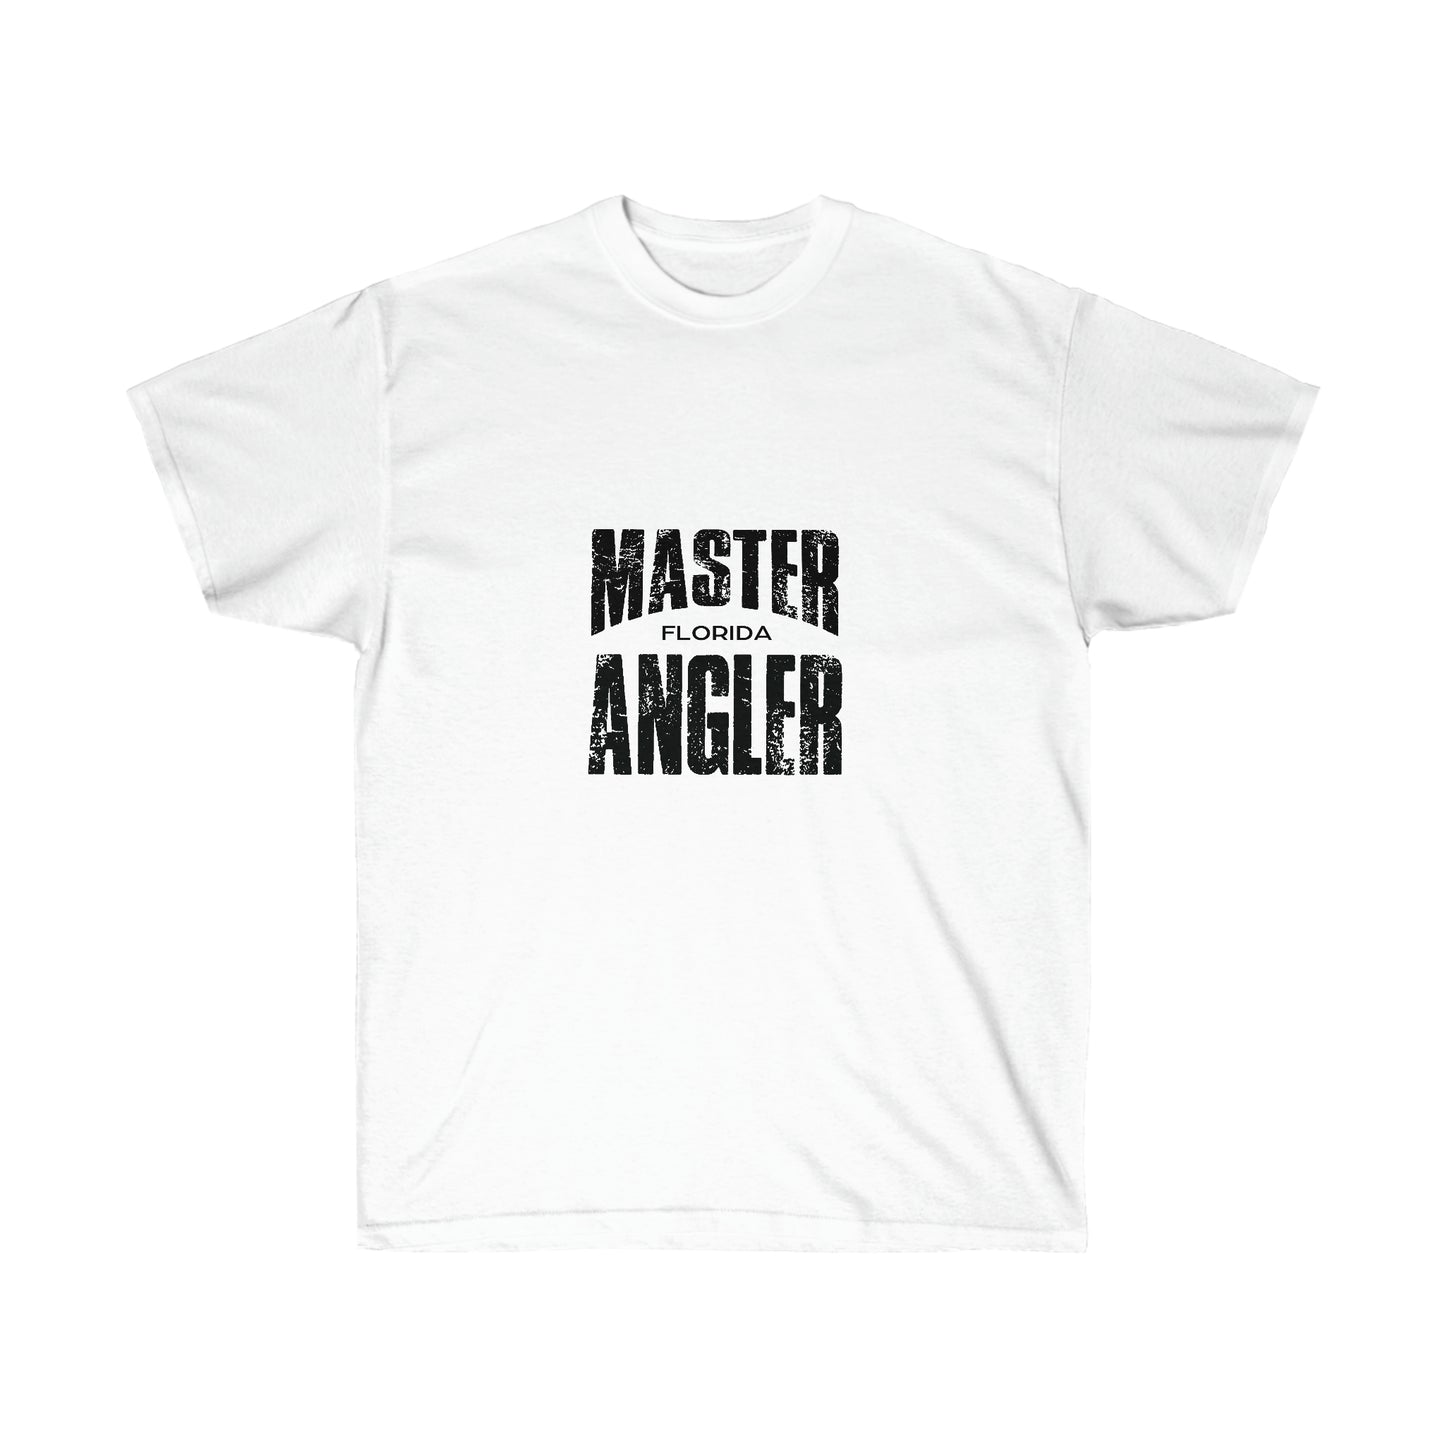 Florida Master Angler - Square Black